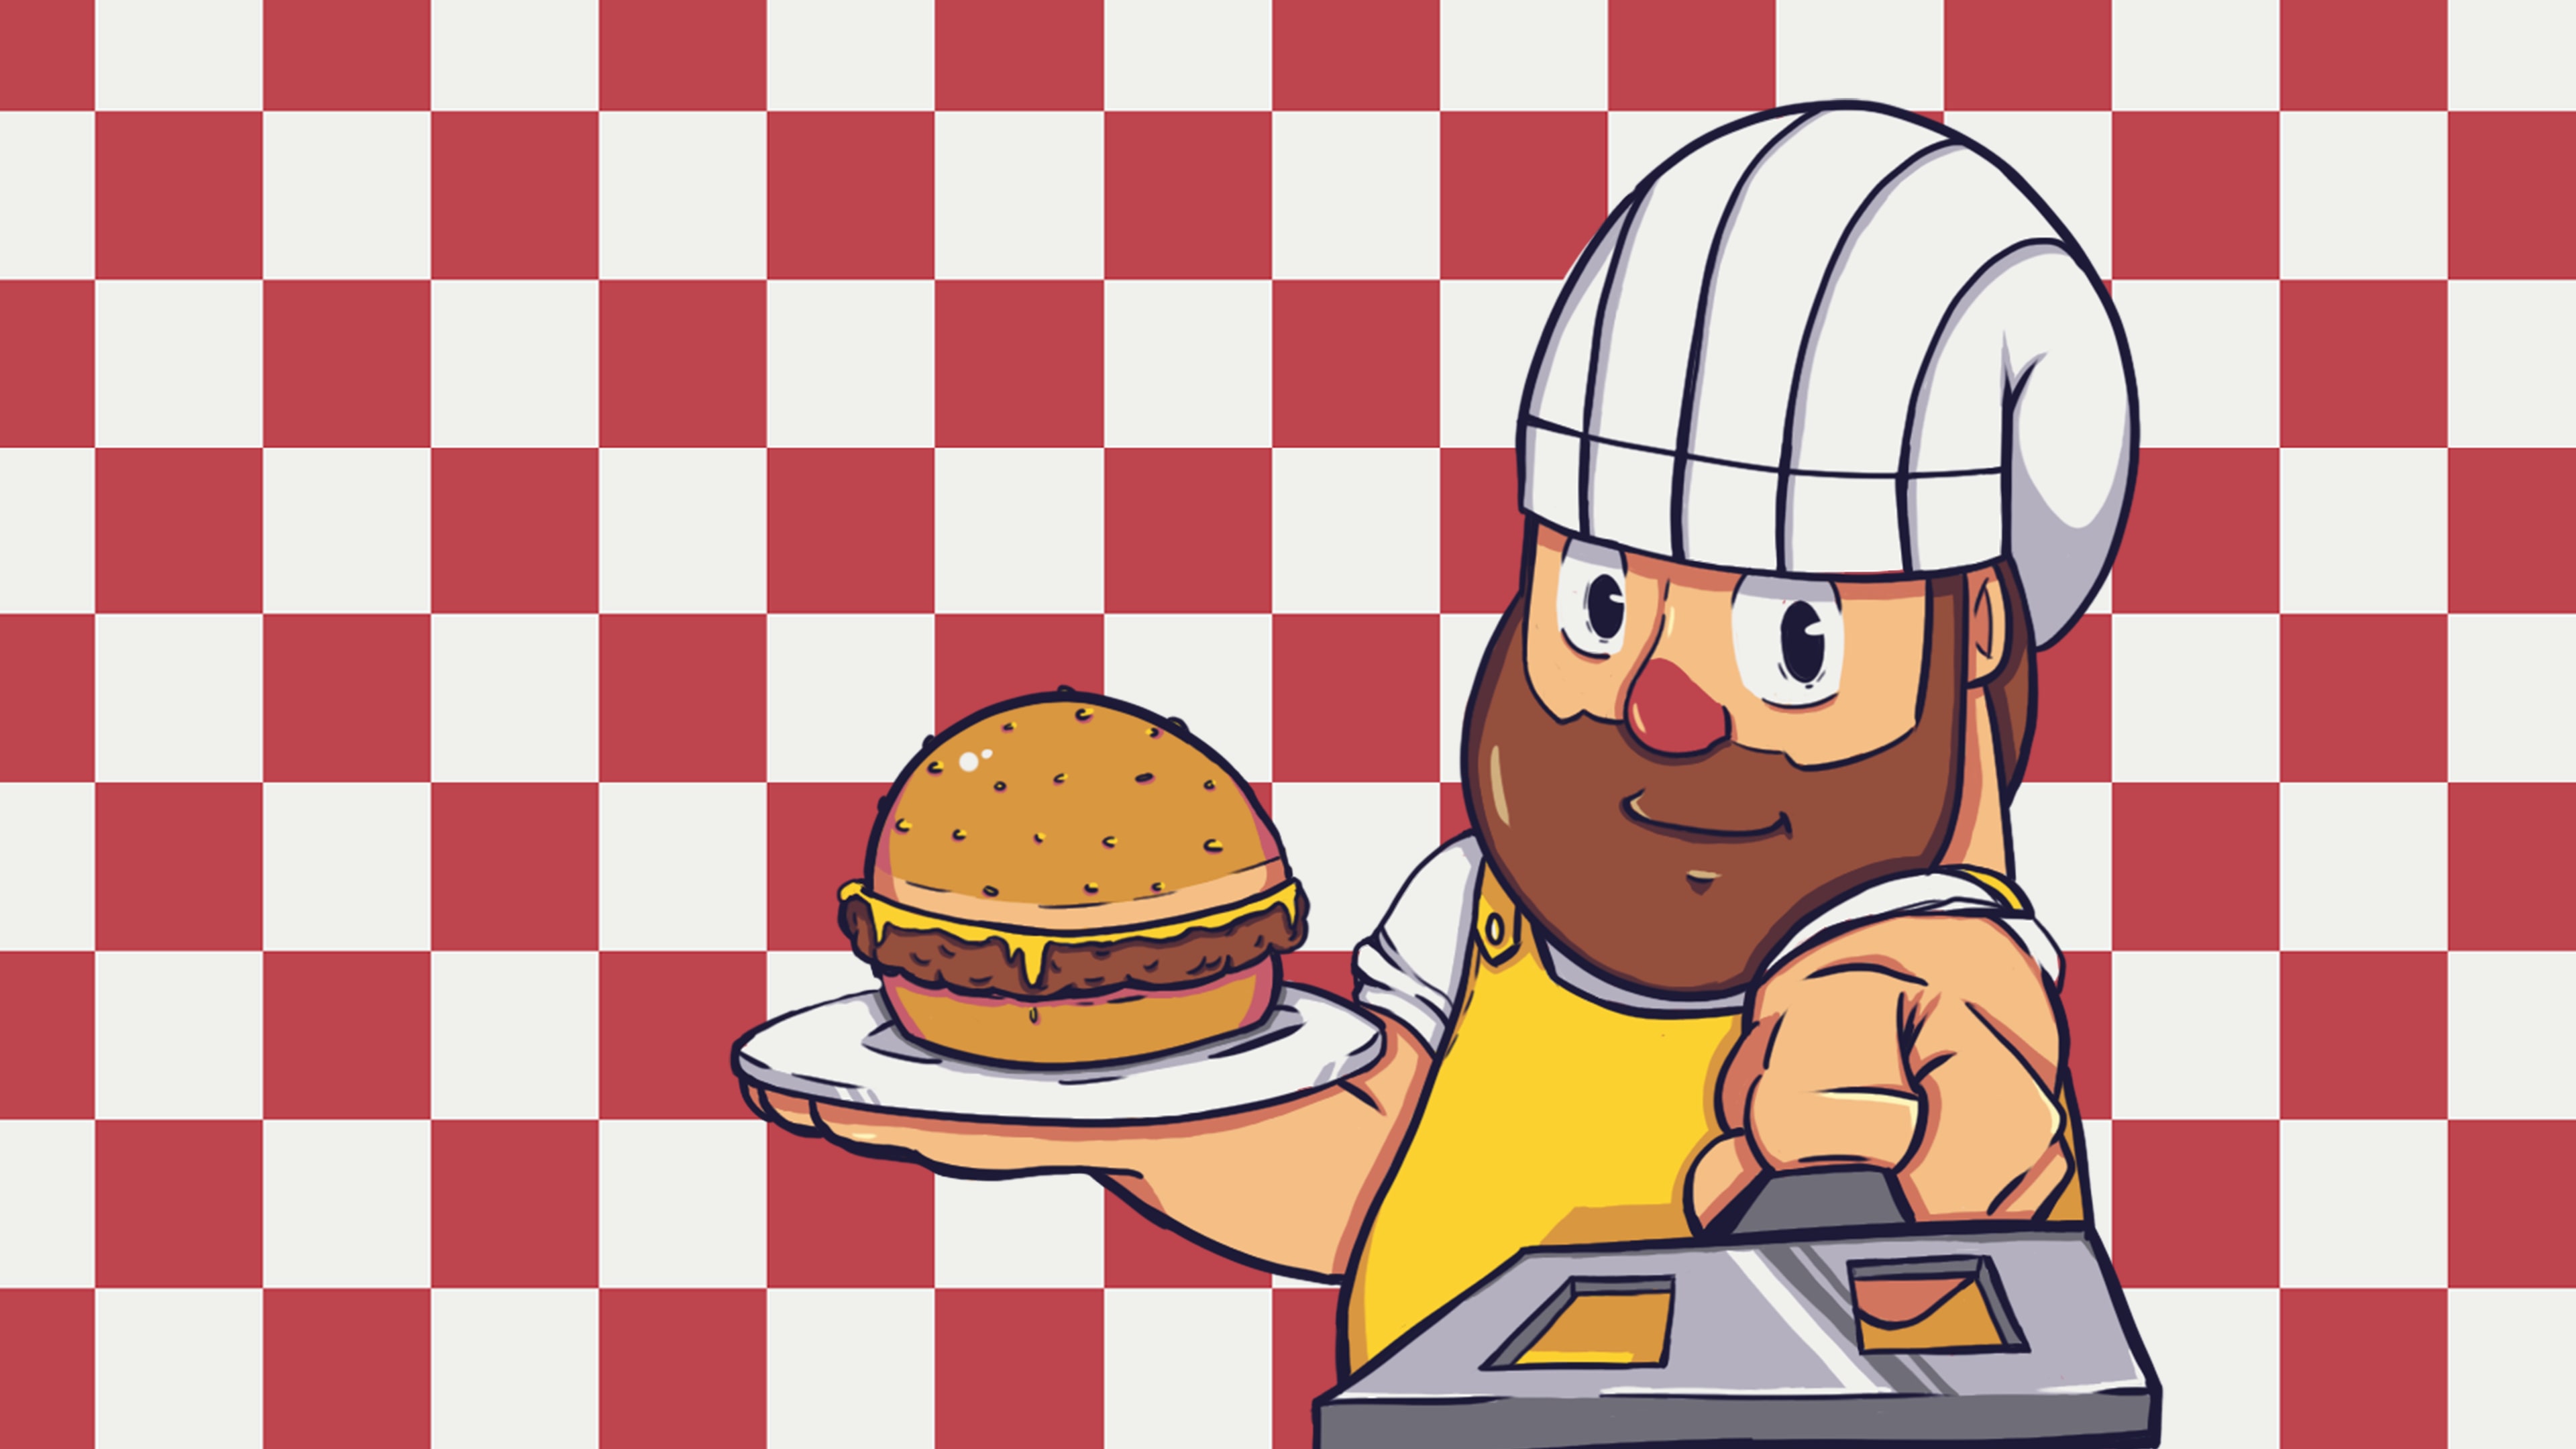 Make the Burger (English)